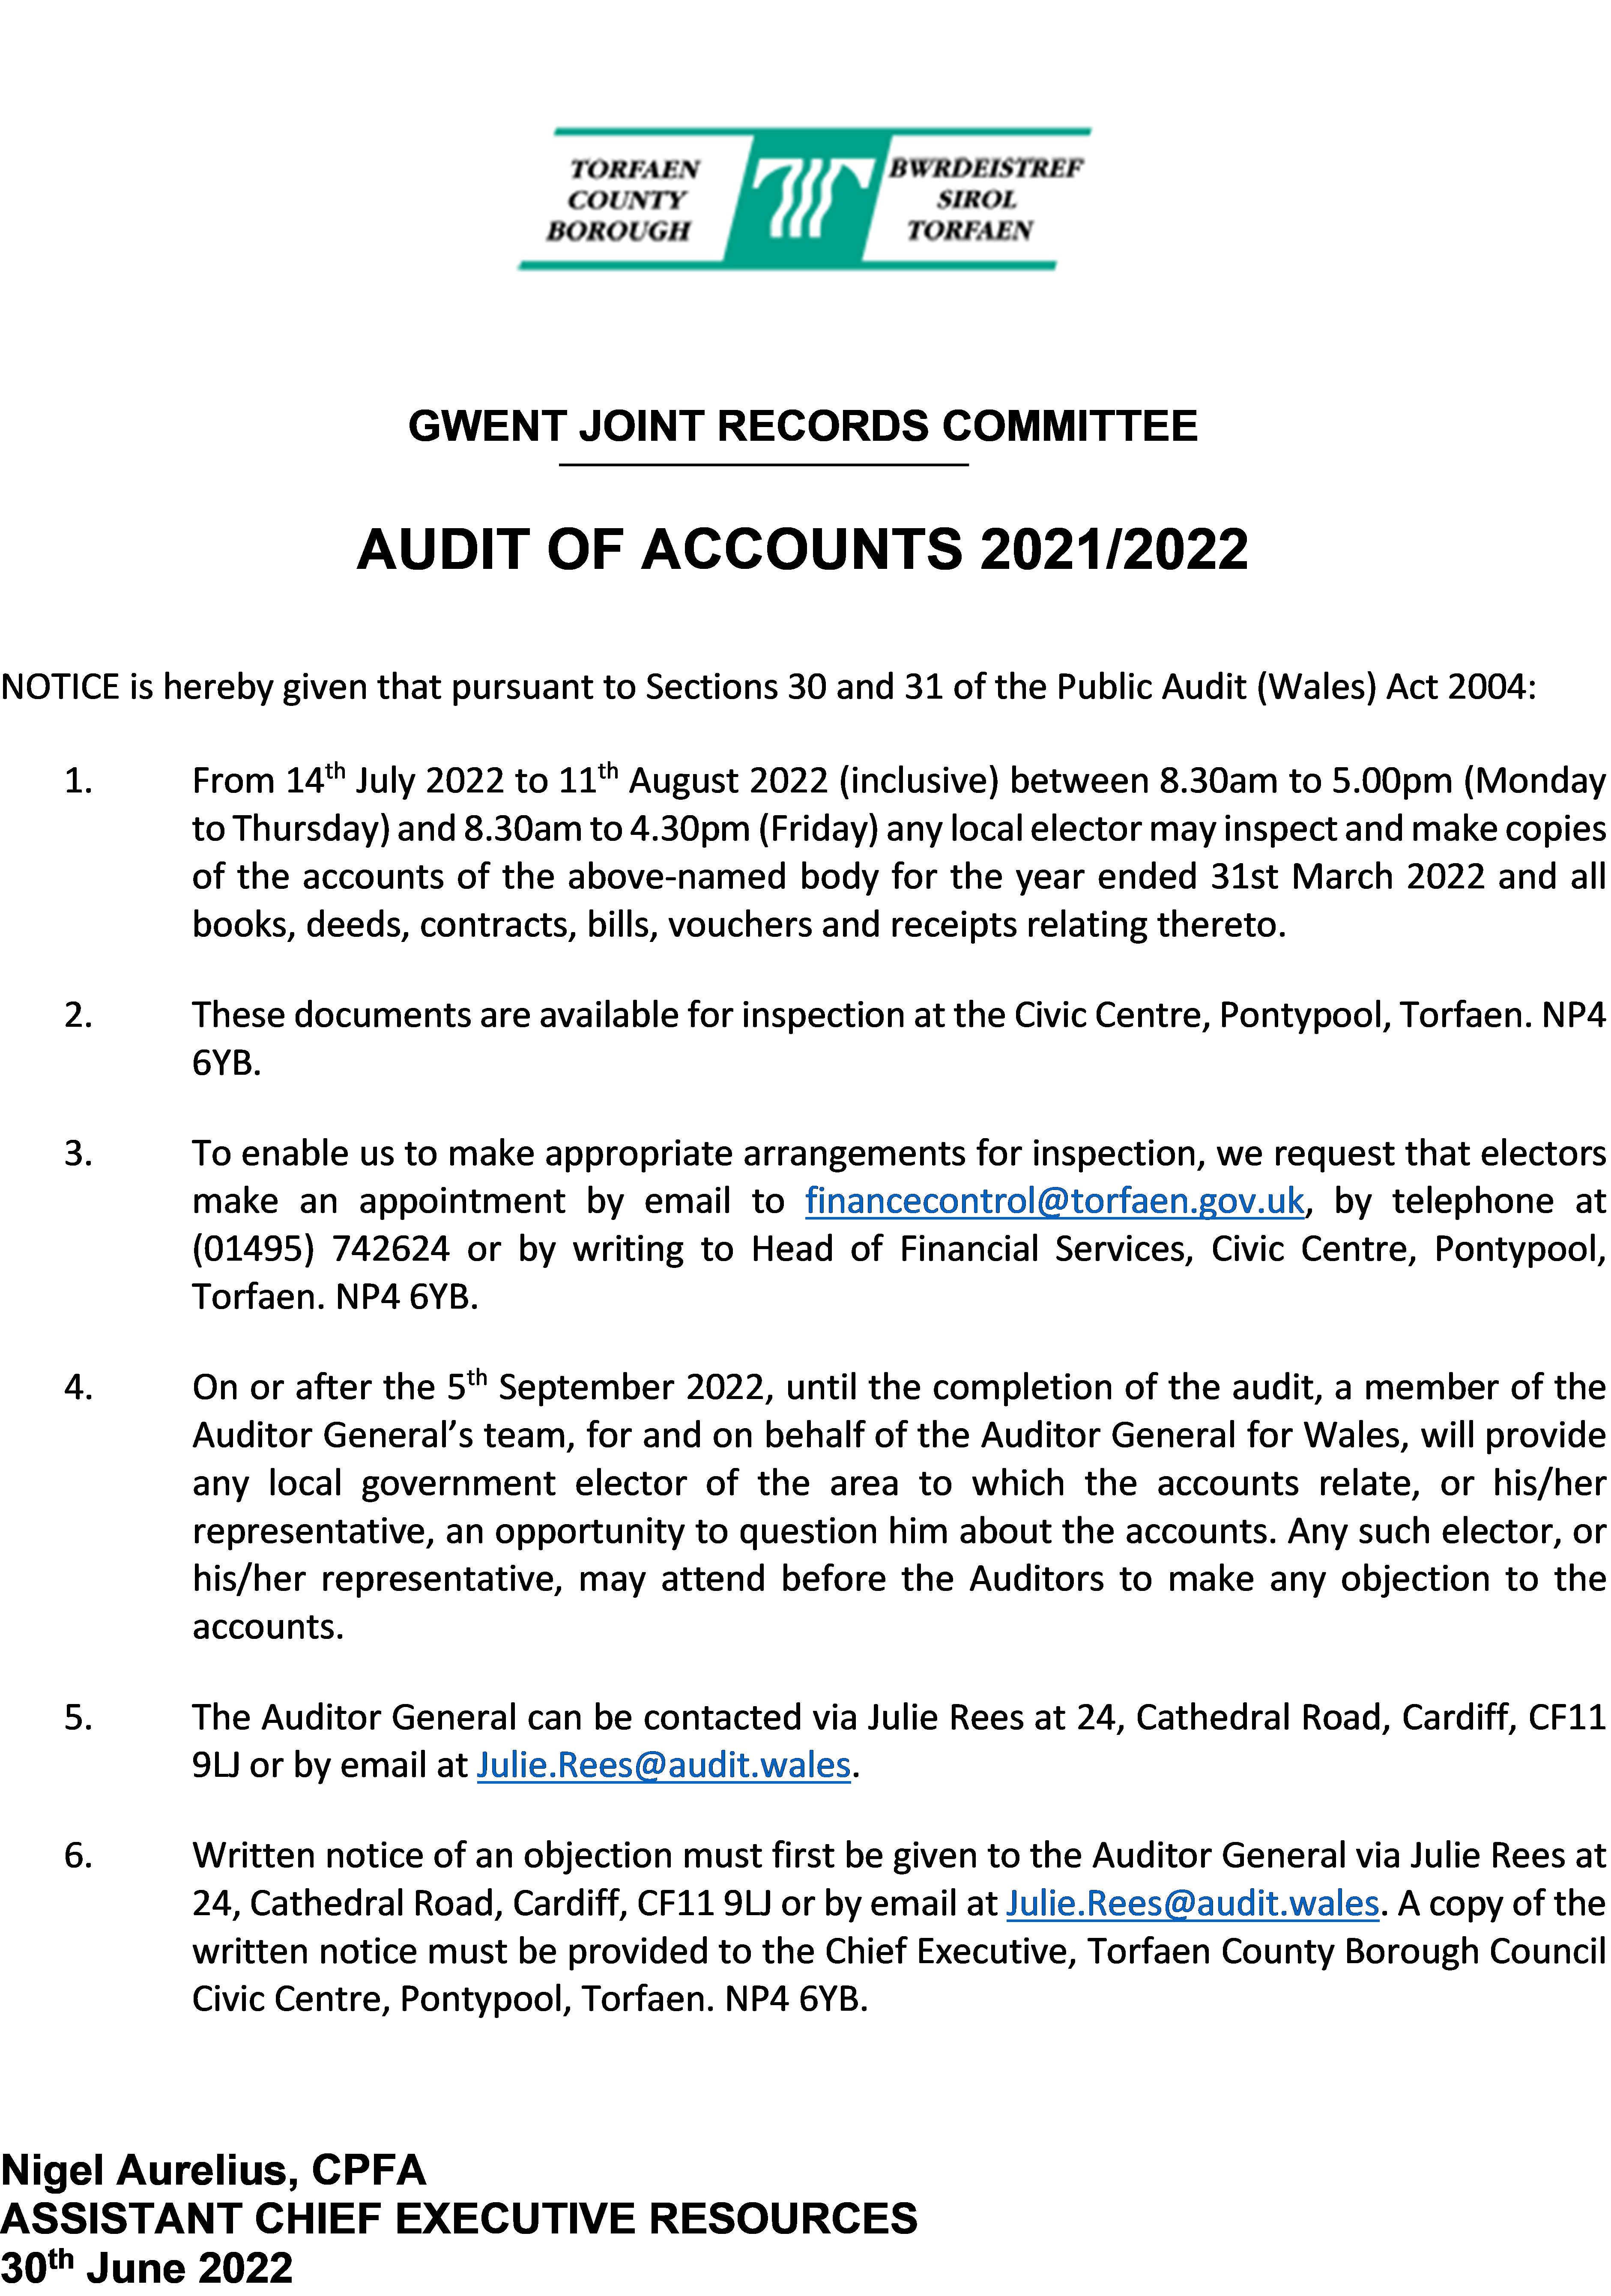 Audit of Acounts 21-22 Notice